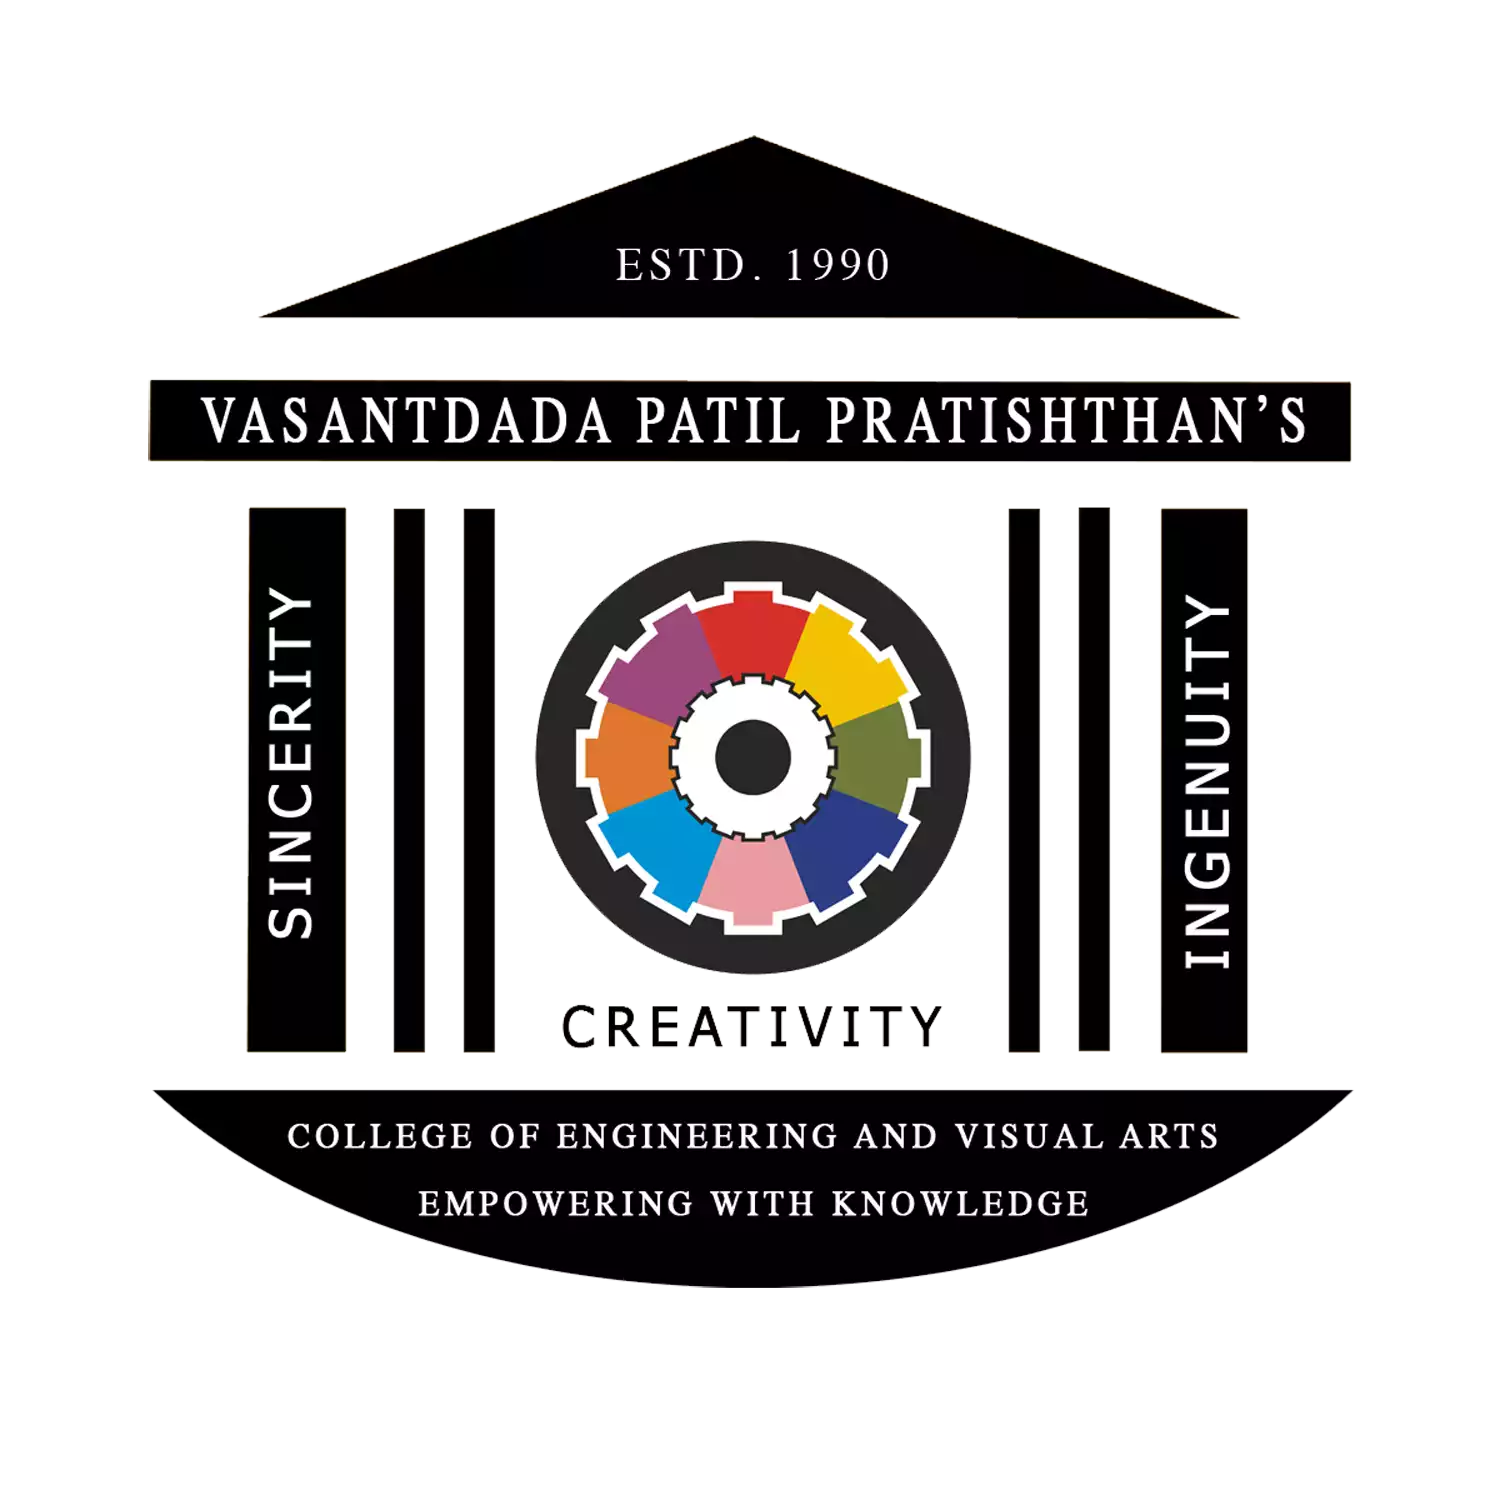 Vasantdada Patil Pratishthan's College of Engineering & Visual arts, Mumbai